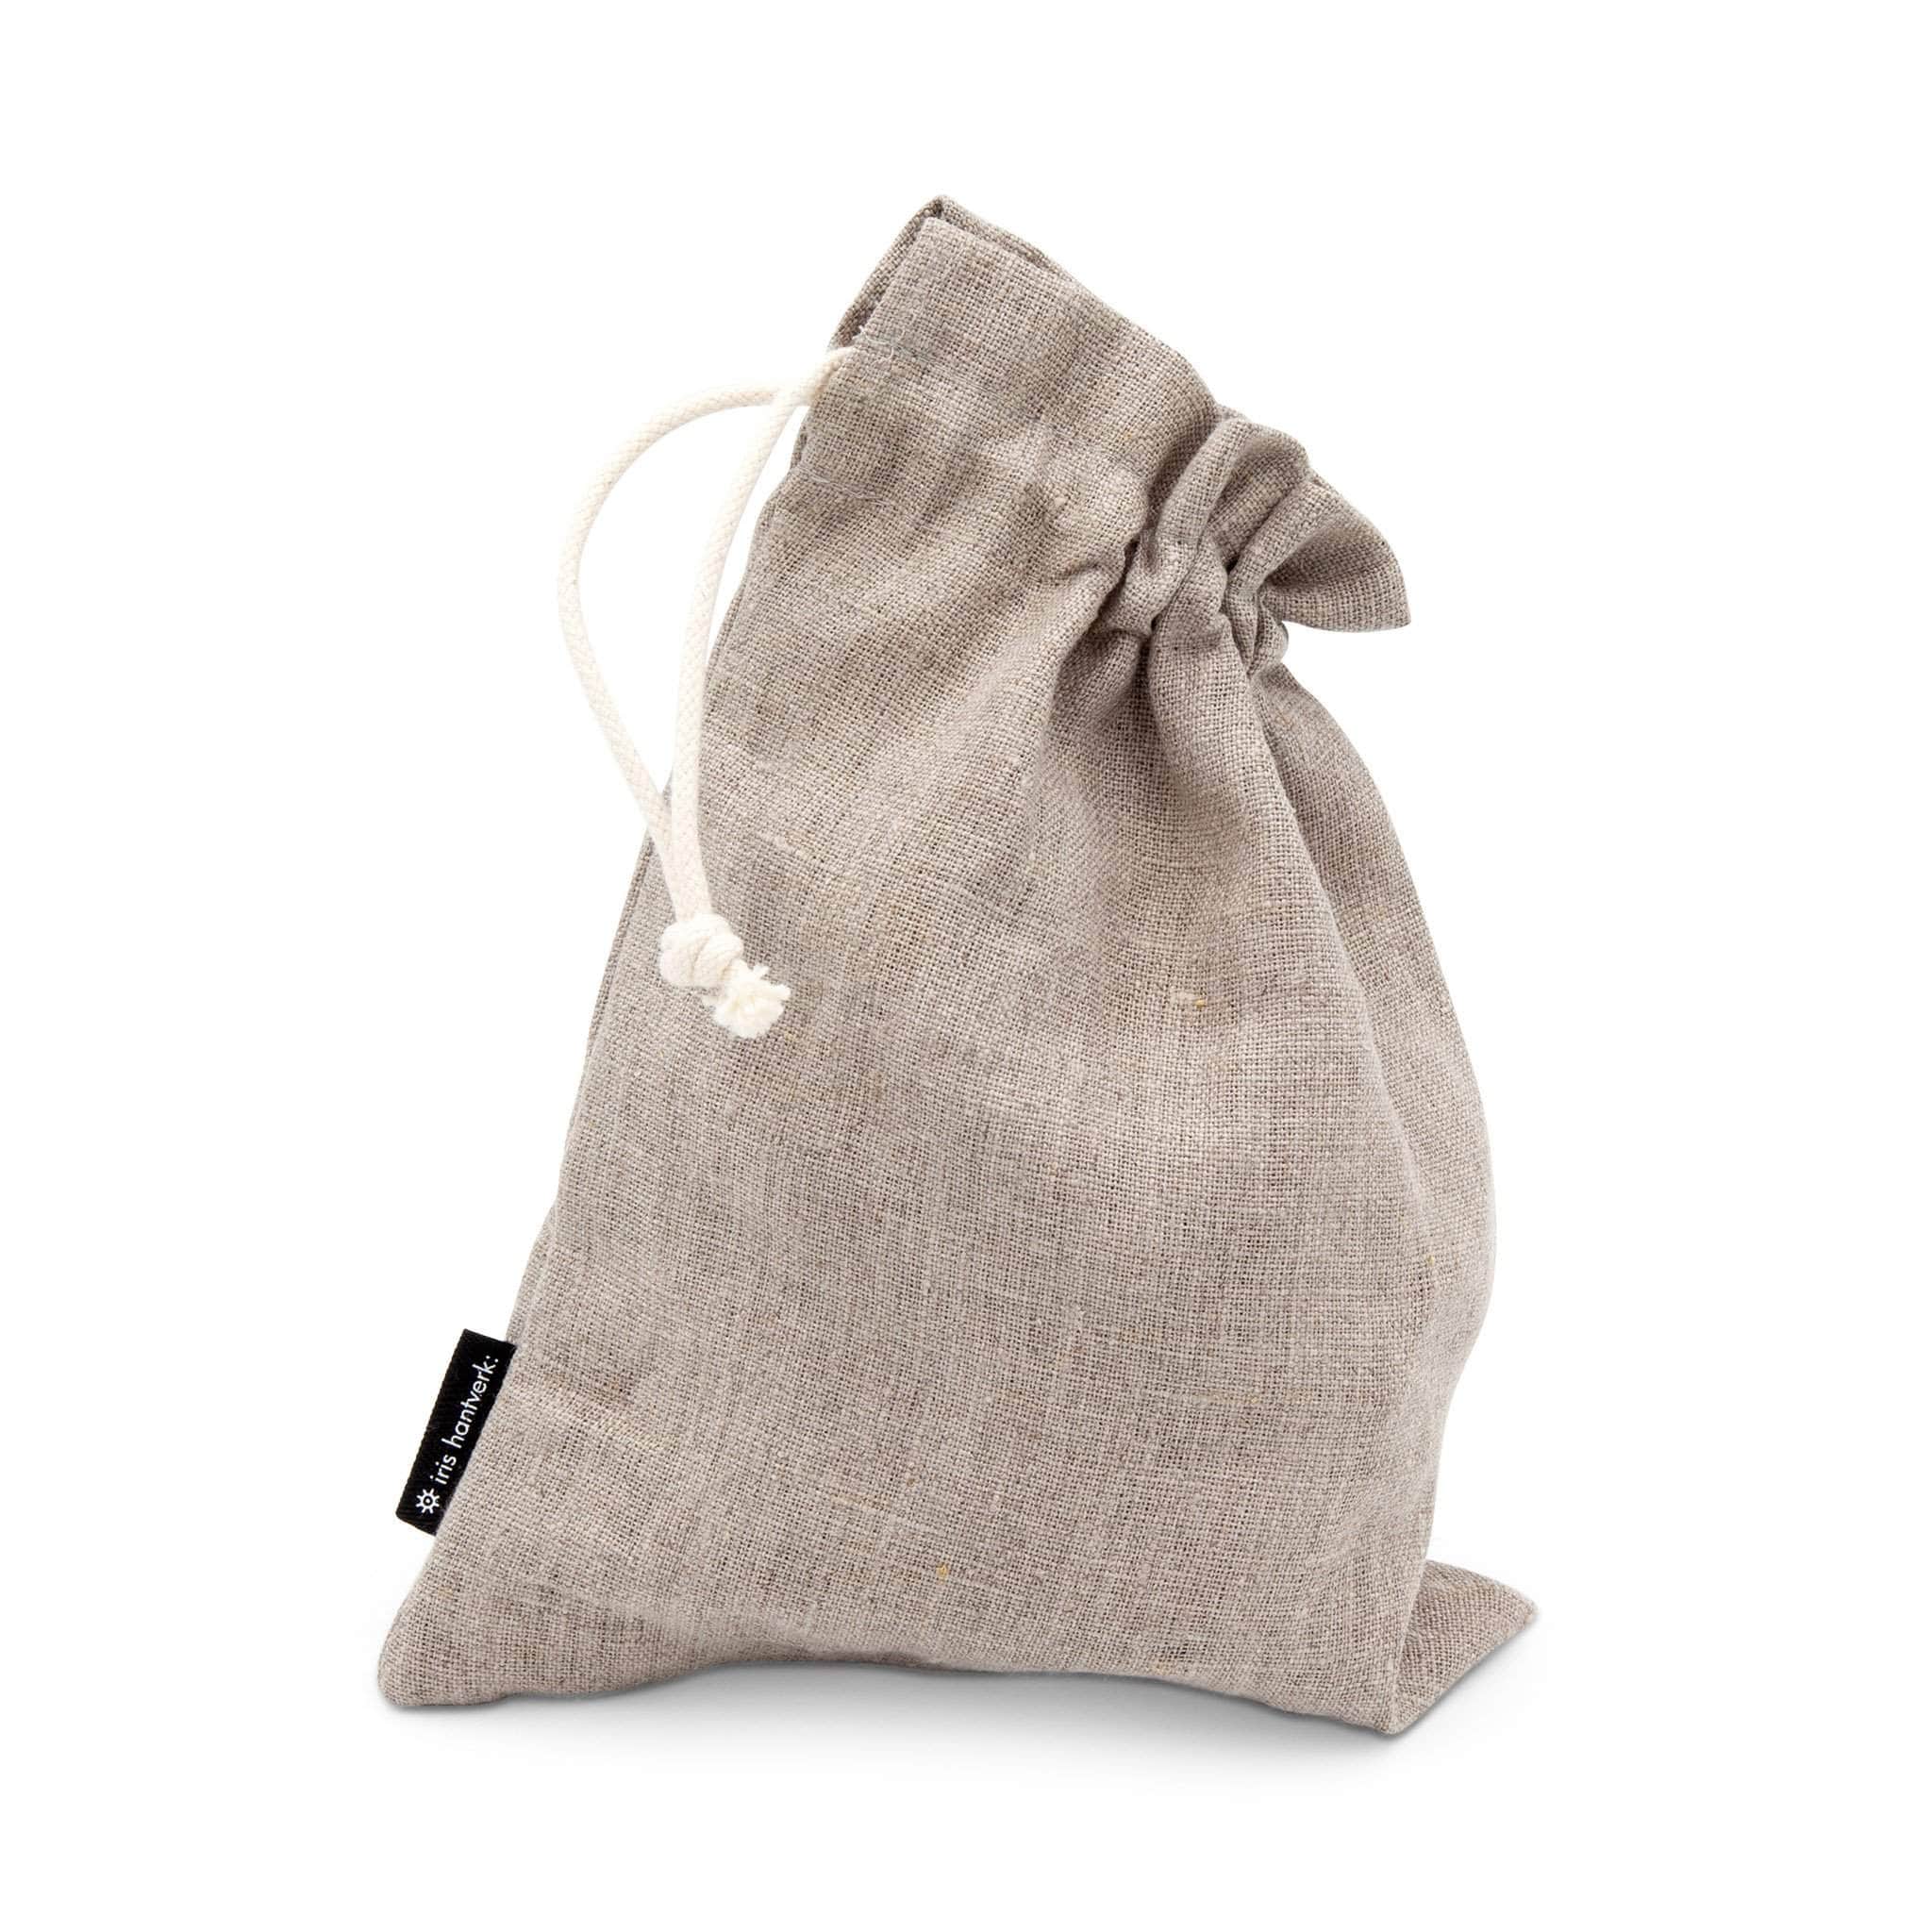 Clothespins in a linen bag